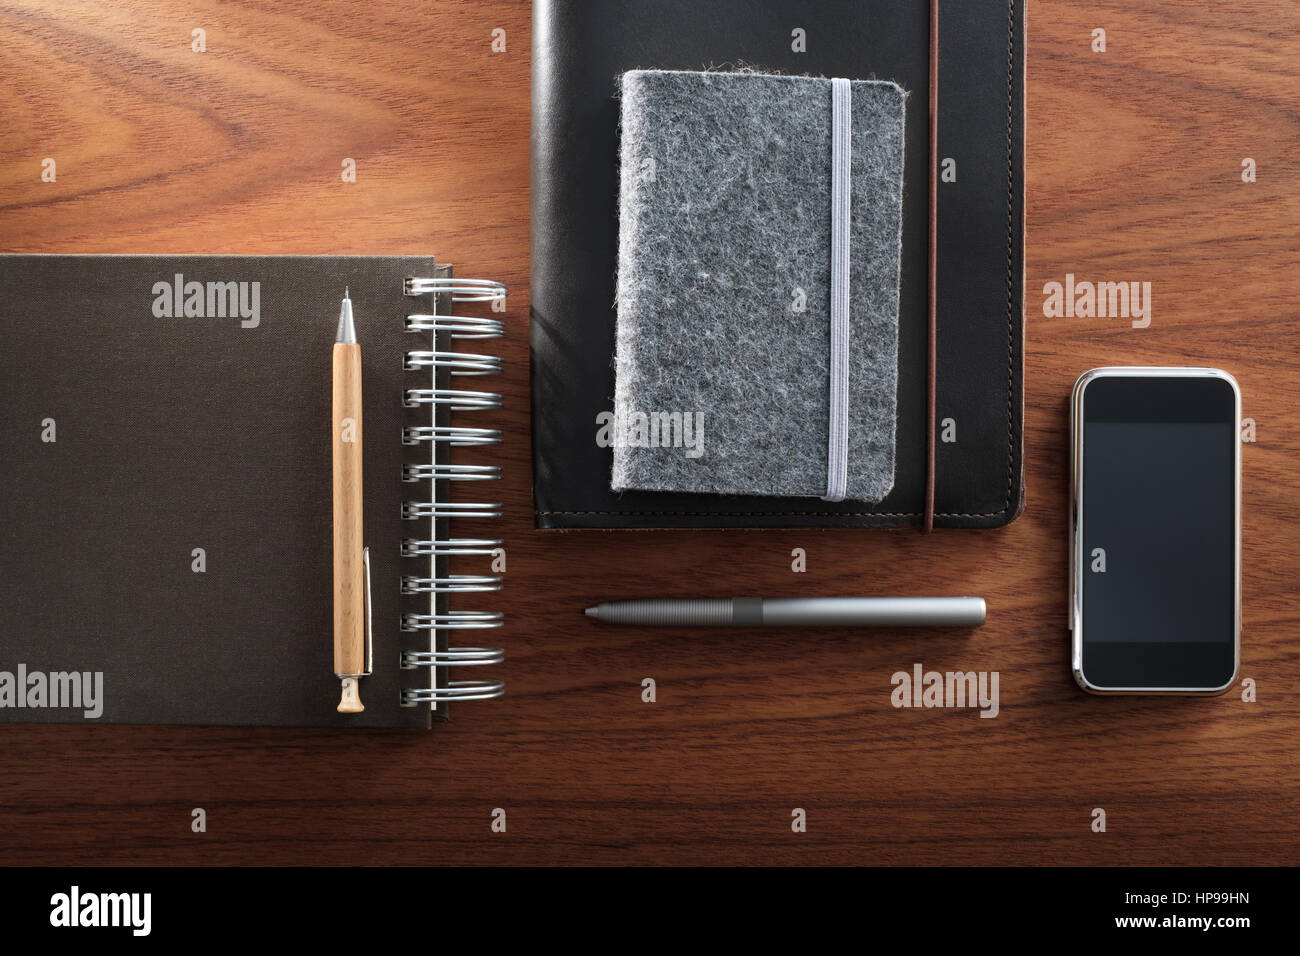 Notepads, pencil, smartphone and digital pen. Analog vs digital. Stock Photo